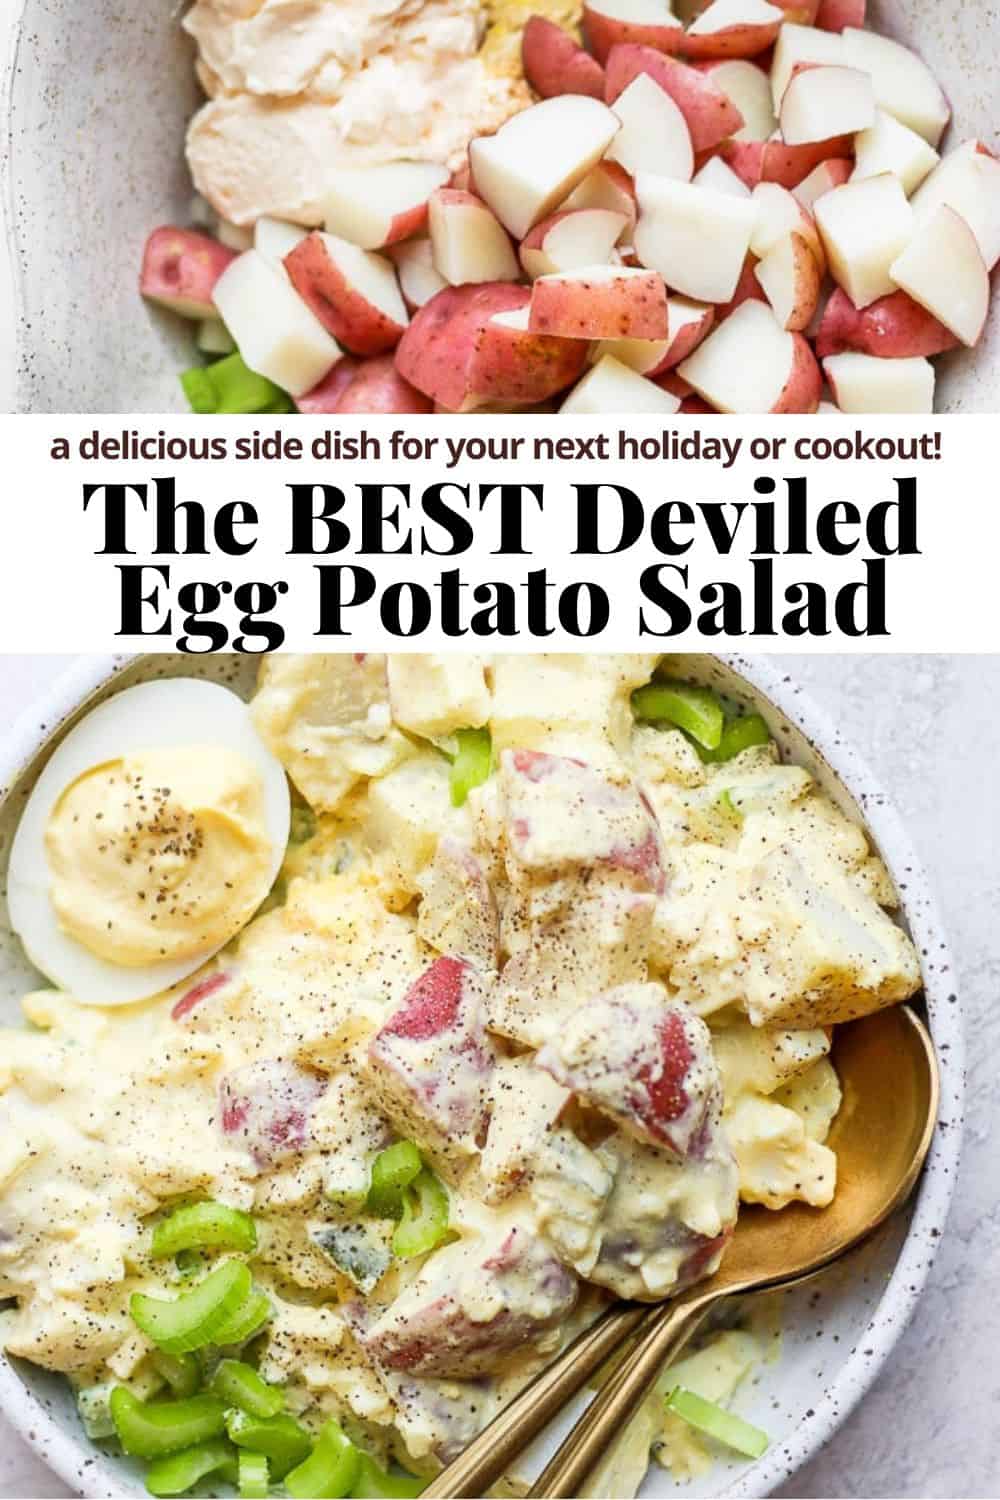 Pinterest image for the best deviled egg potato salad recipe.